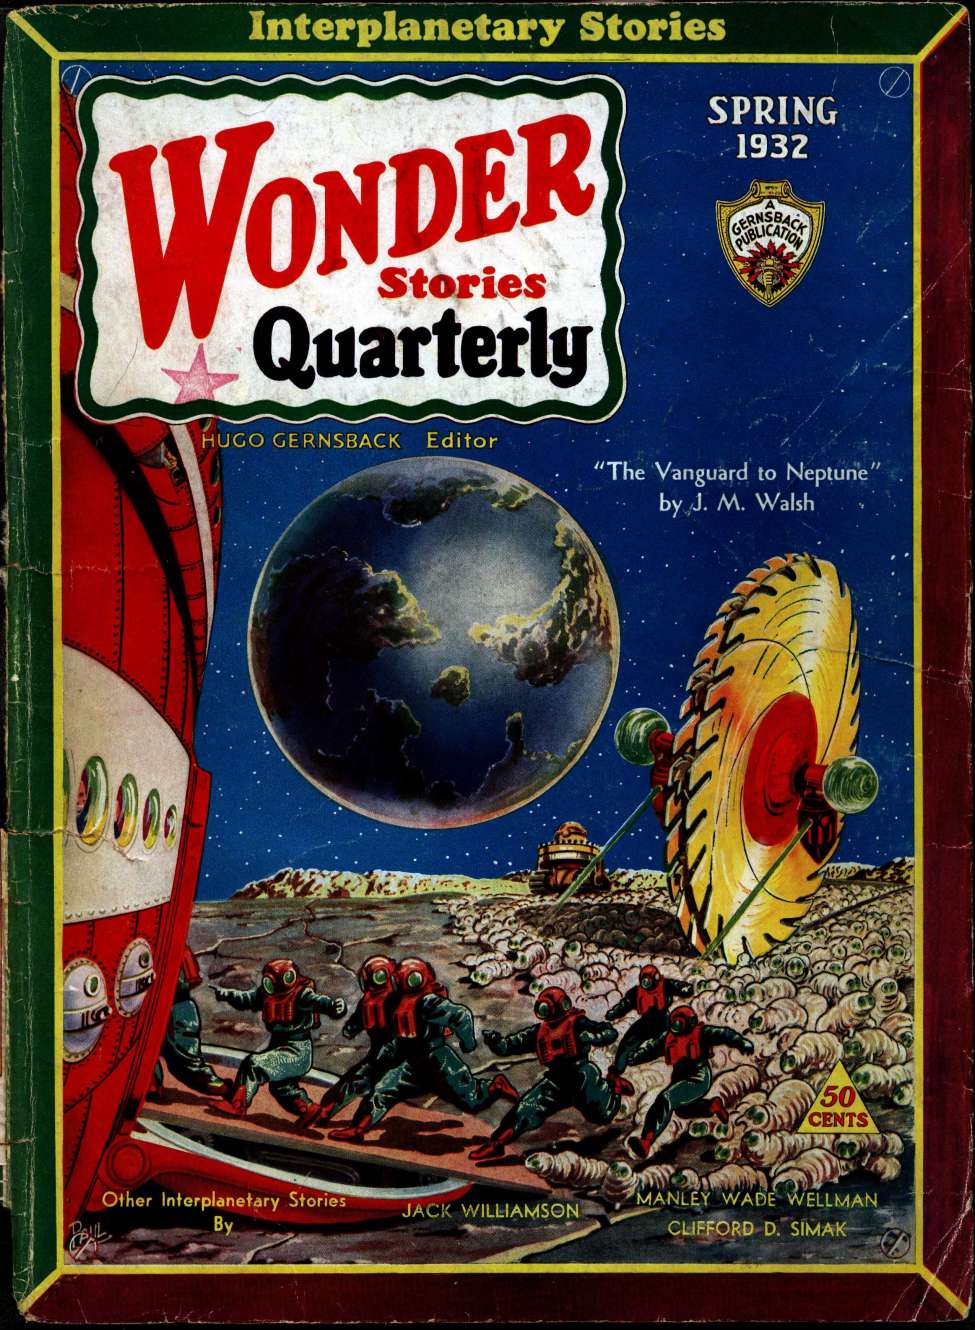 Book Cover For Wonder Stories Quarterly v3 3 - The Vanguard to Neptune - J. M. Walsh